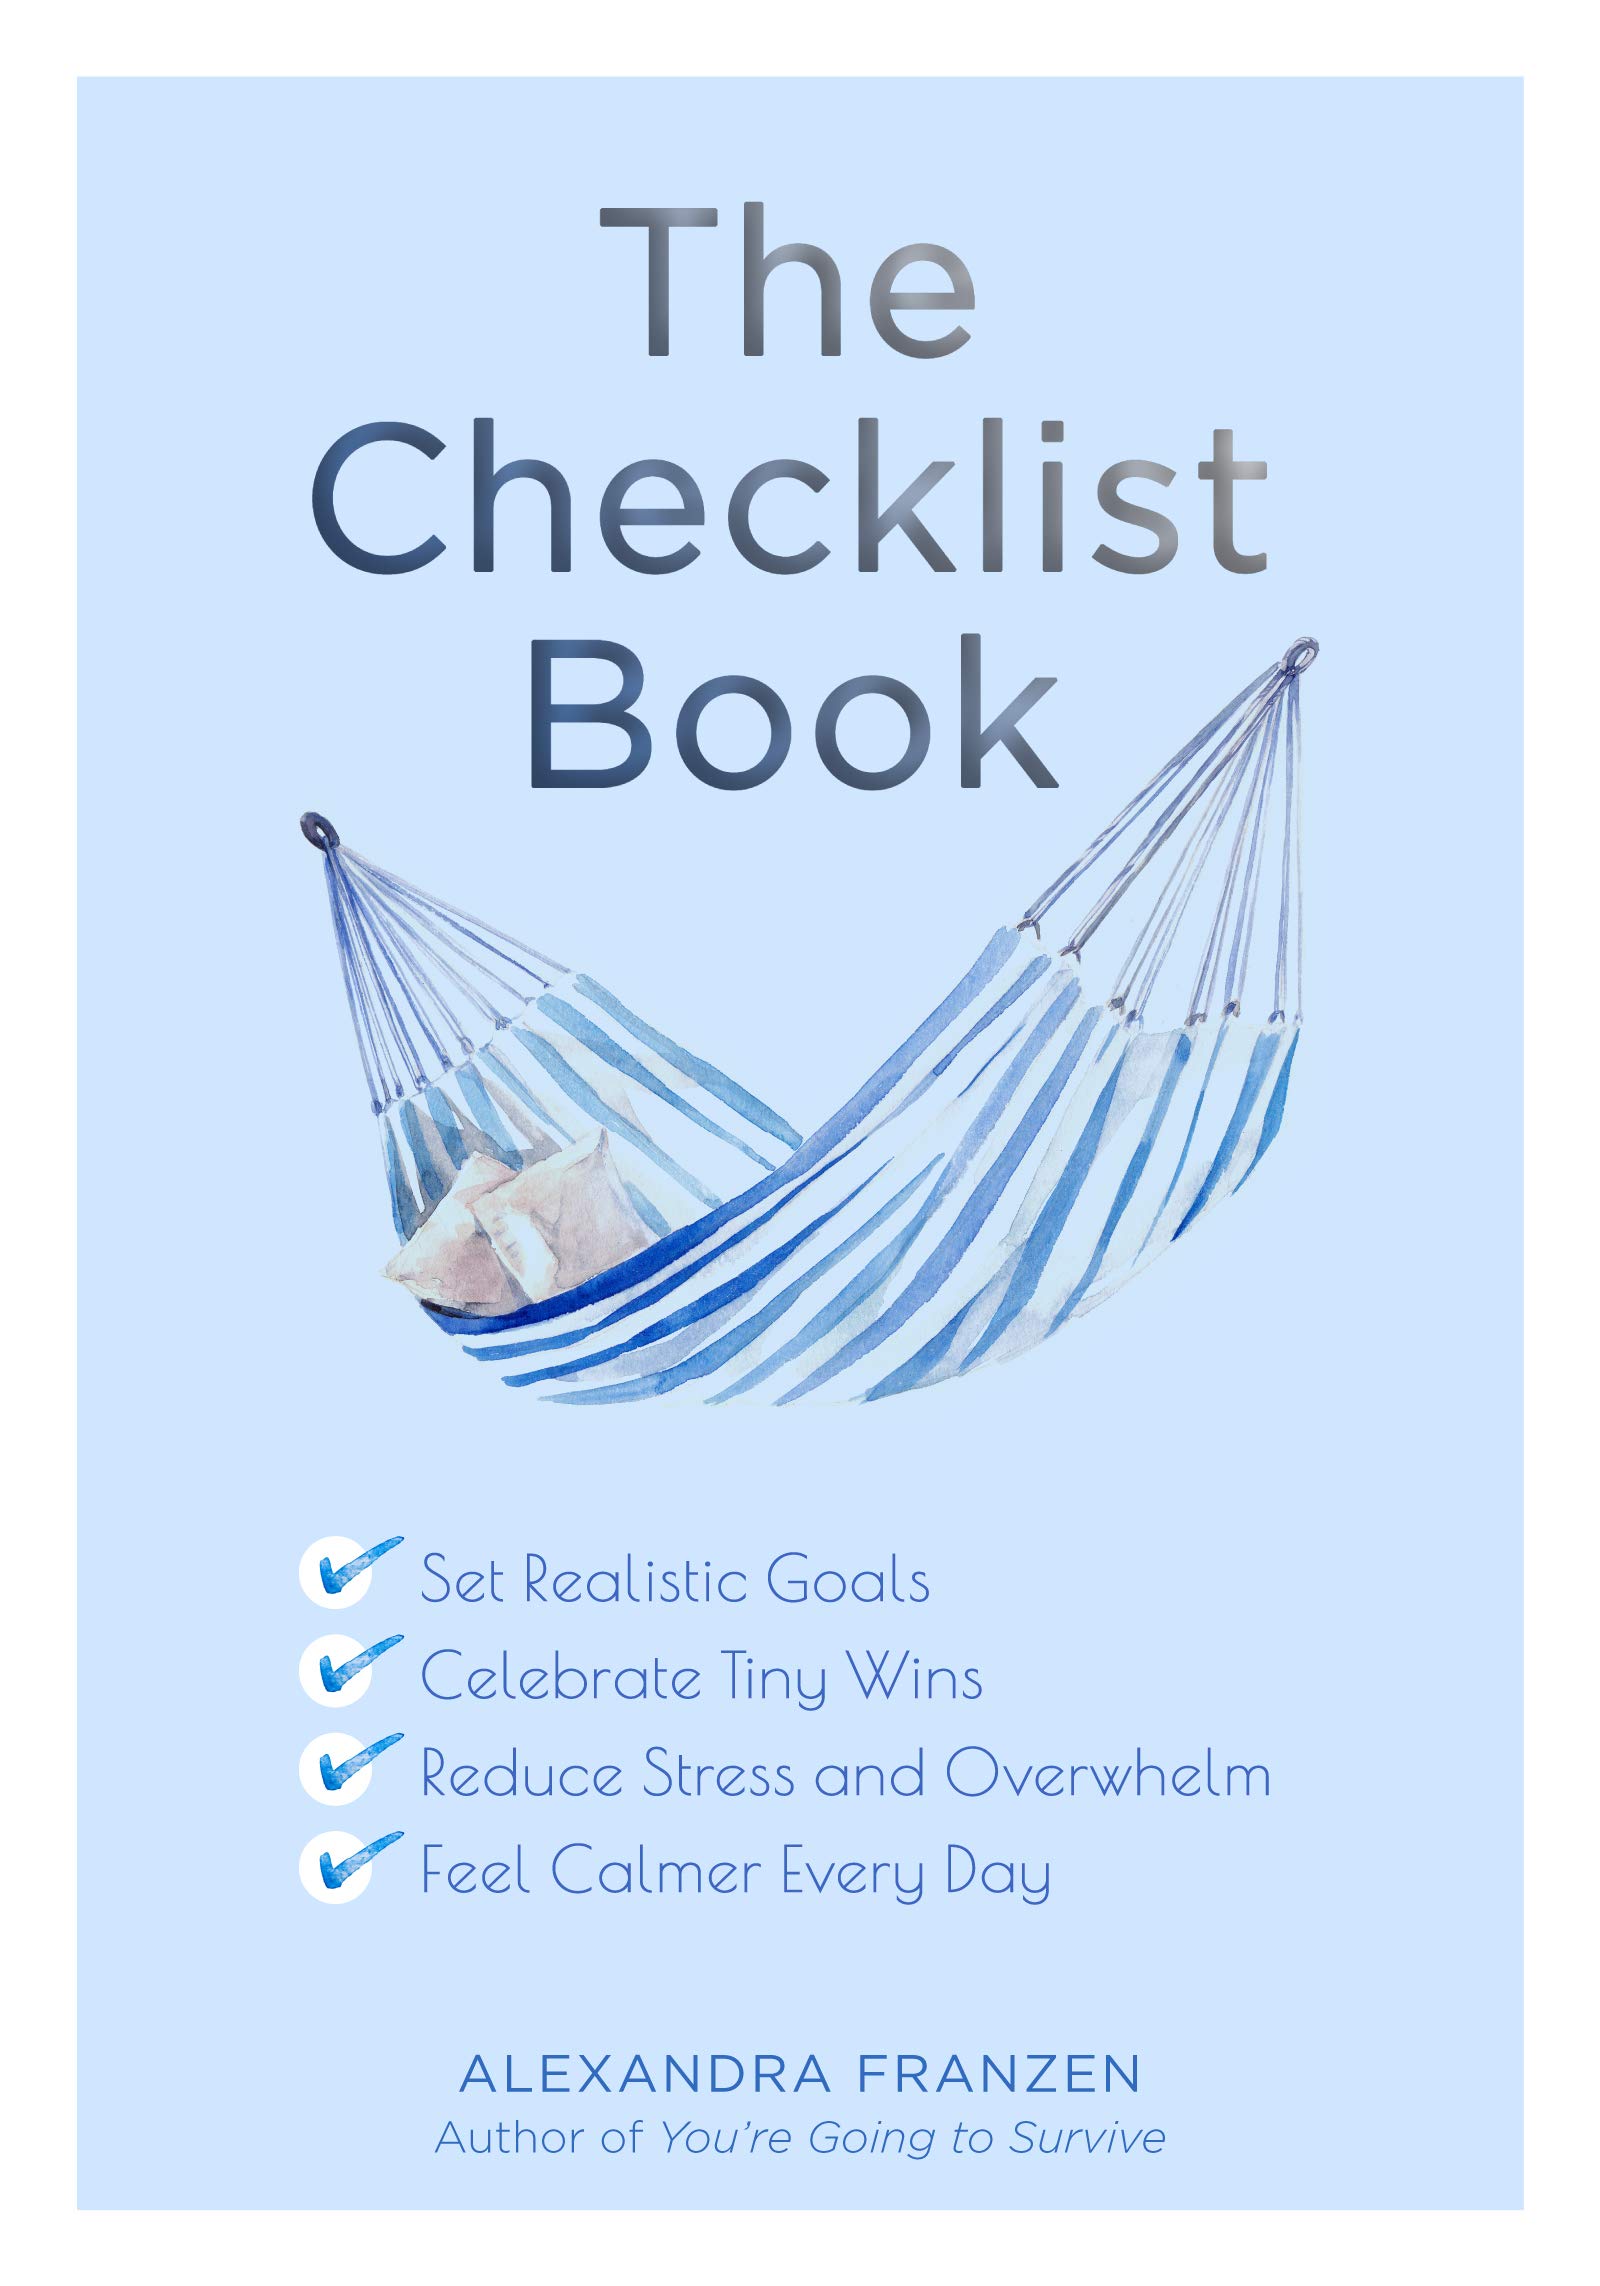 The Checklist Book by Alexandra Franzen